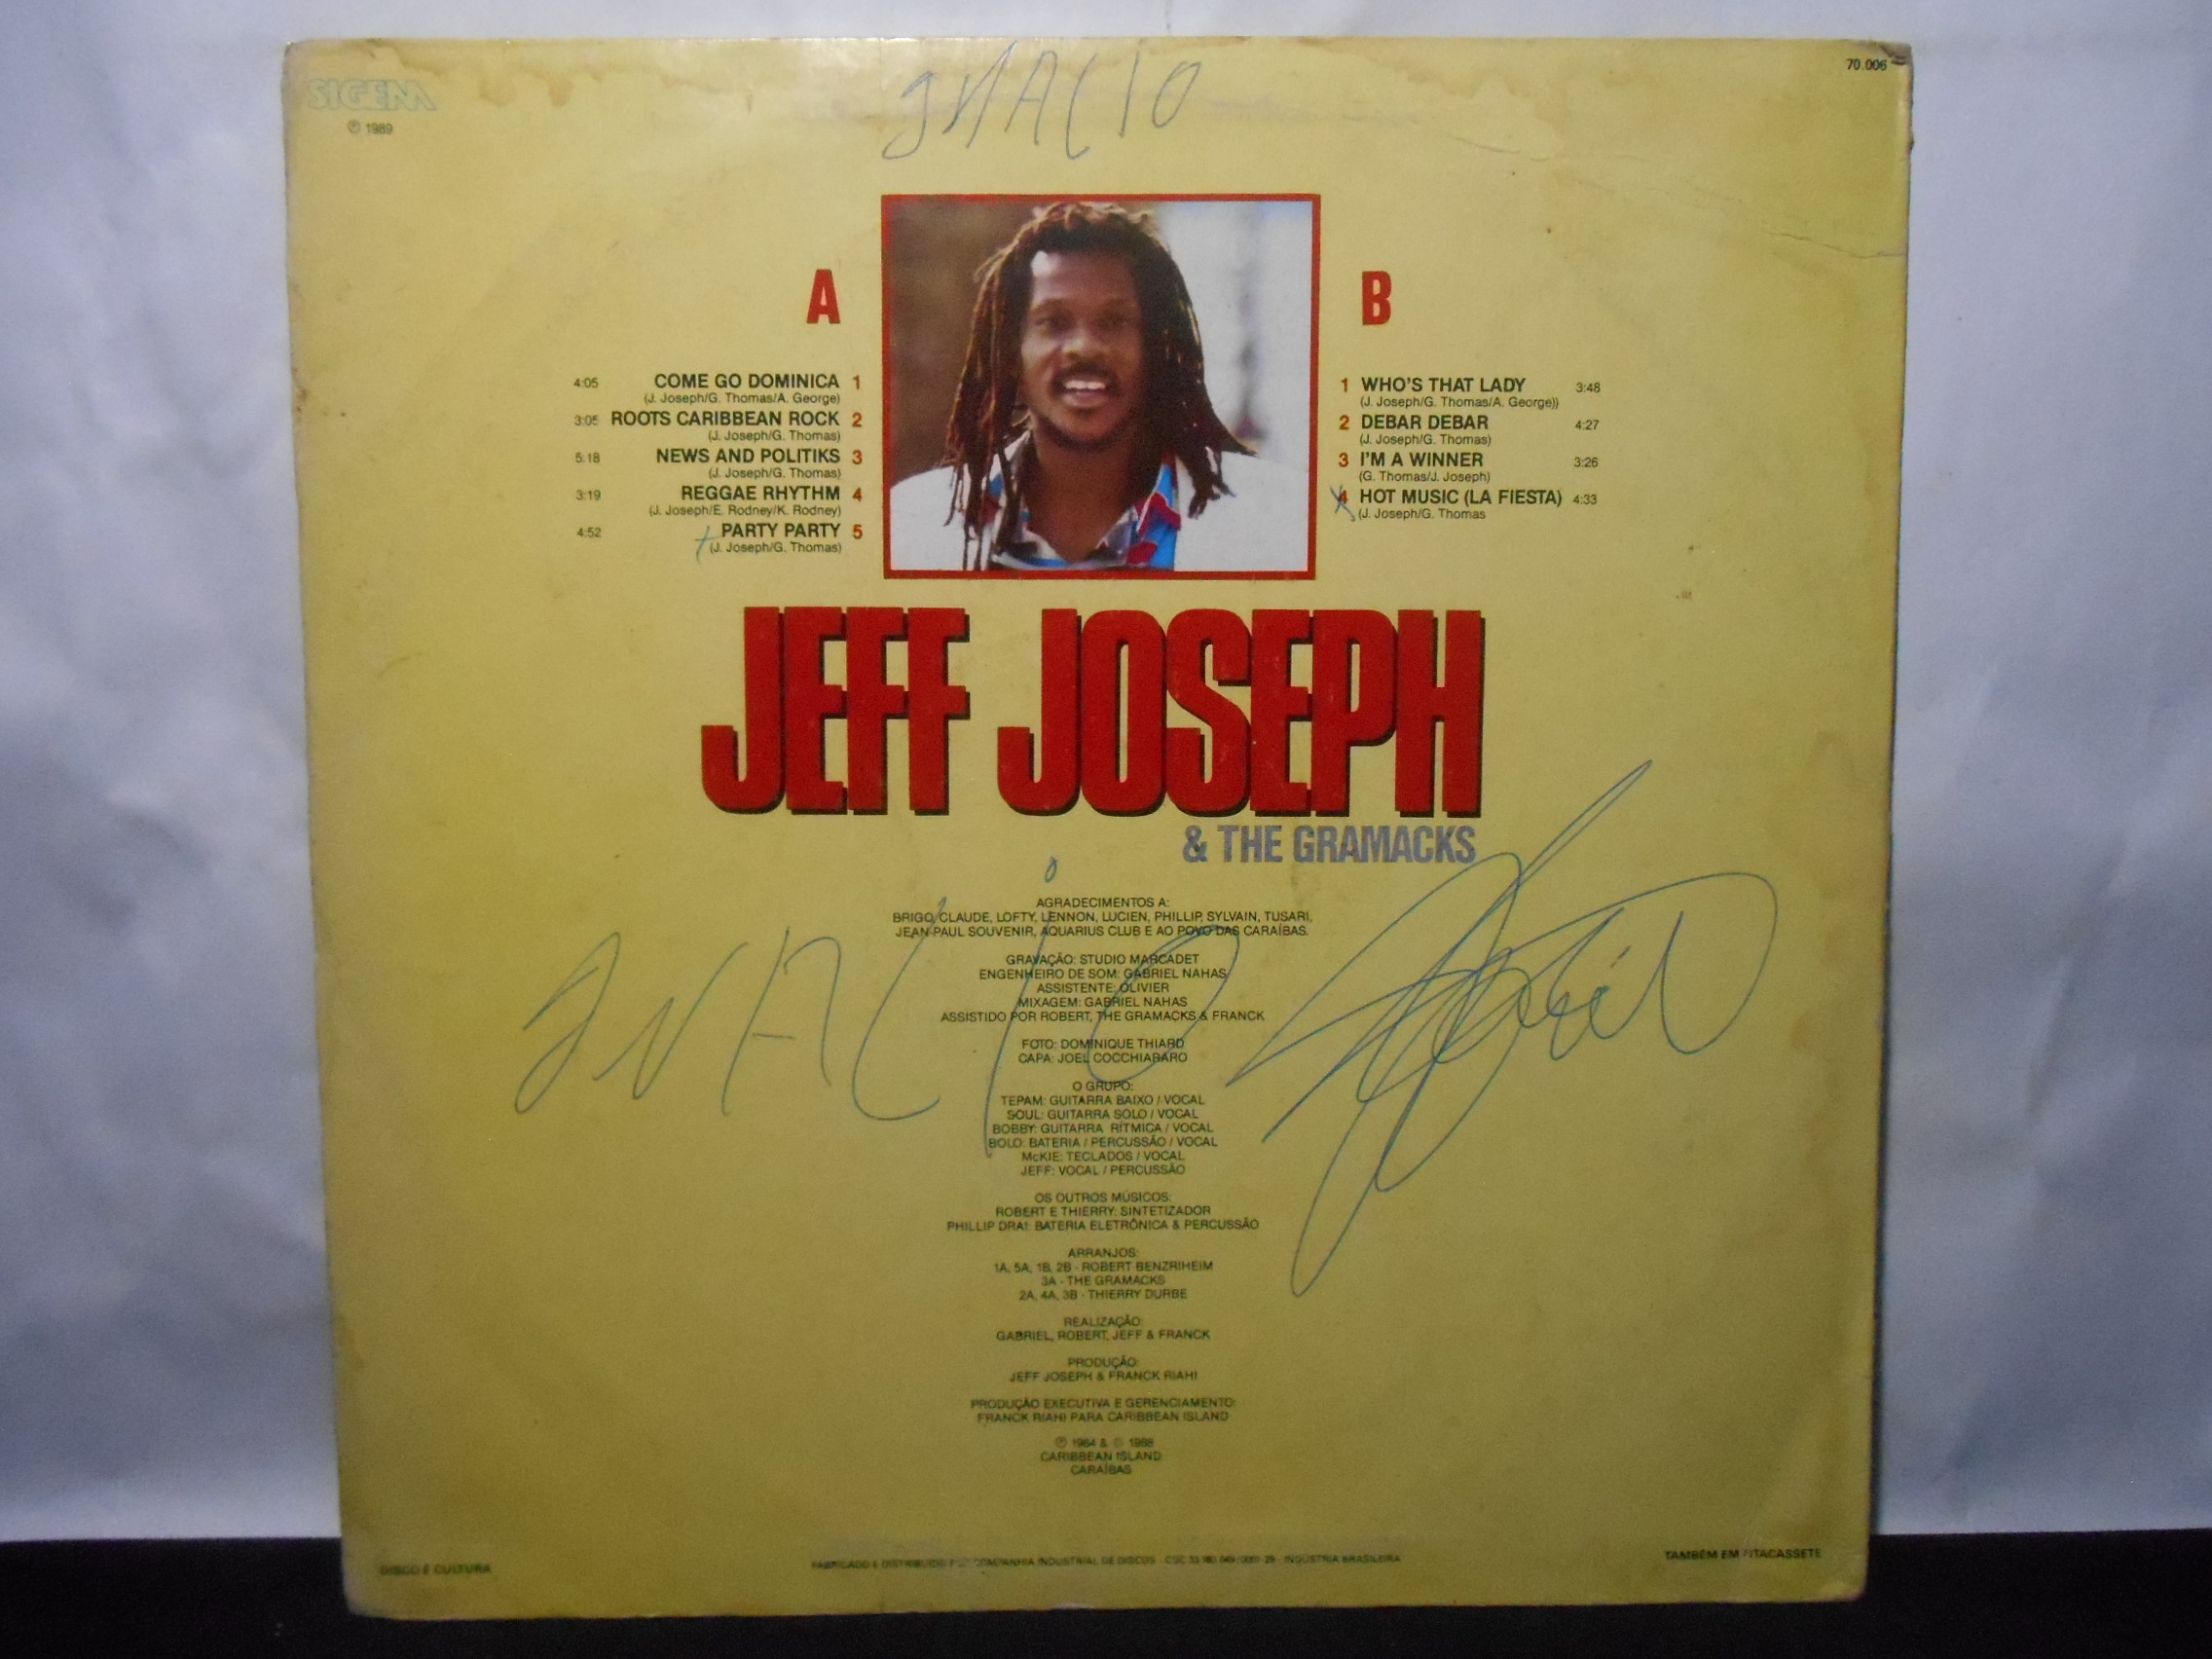 Vinil - Jeff Joseph and the Gramacks - 1989